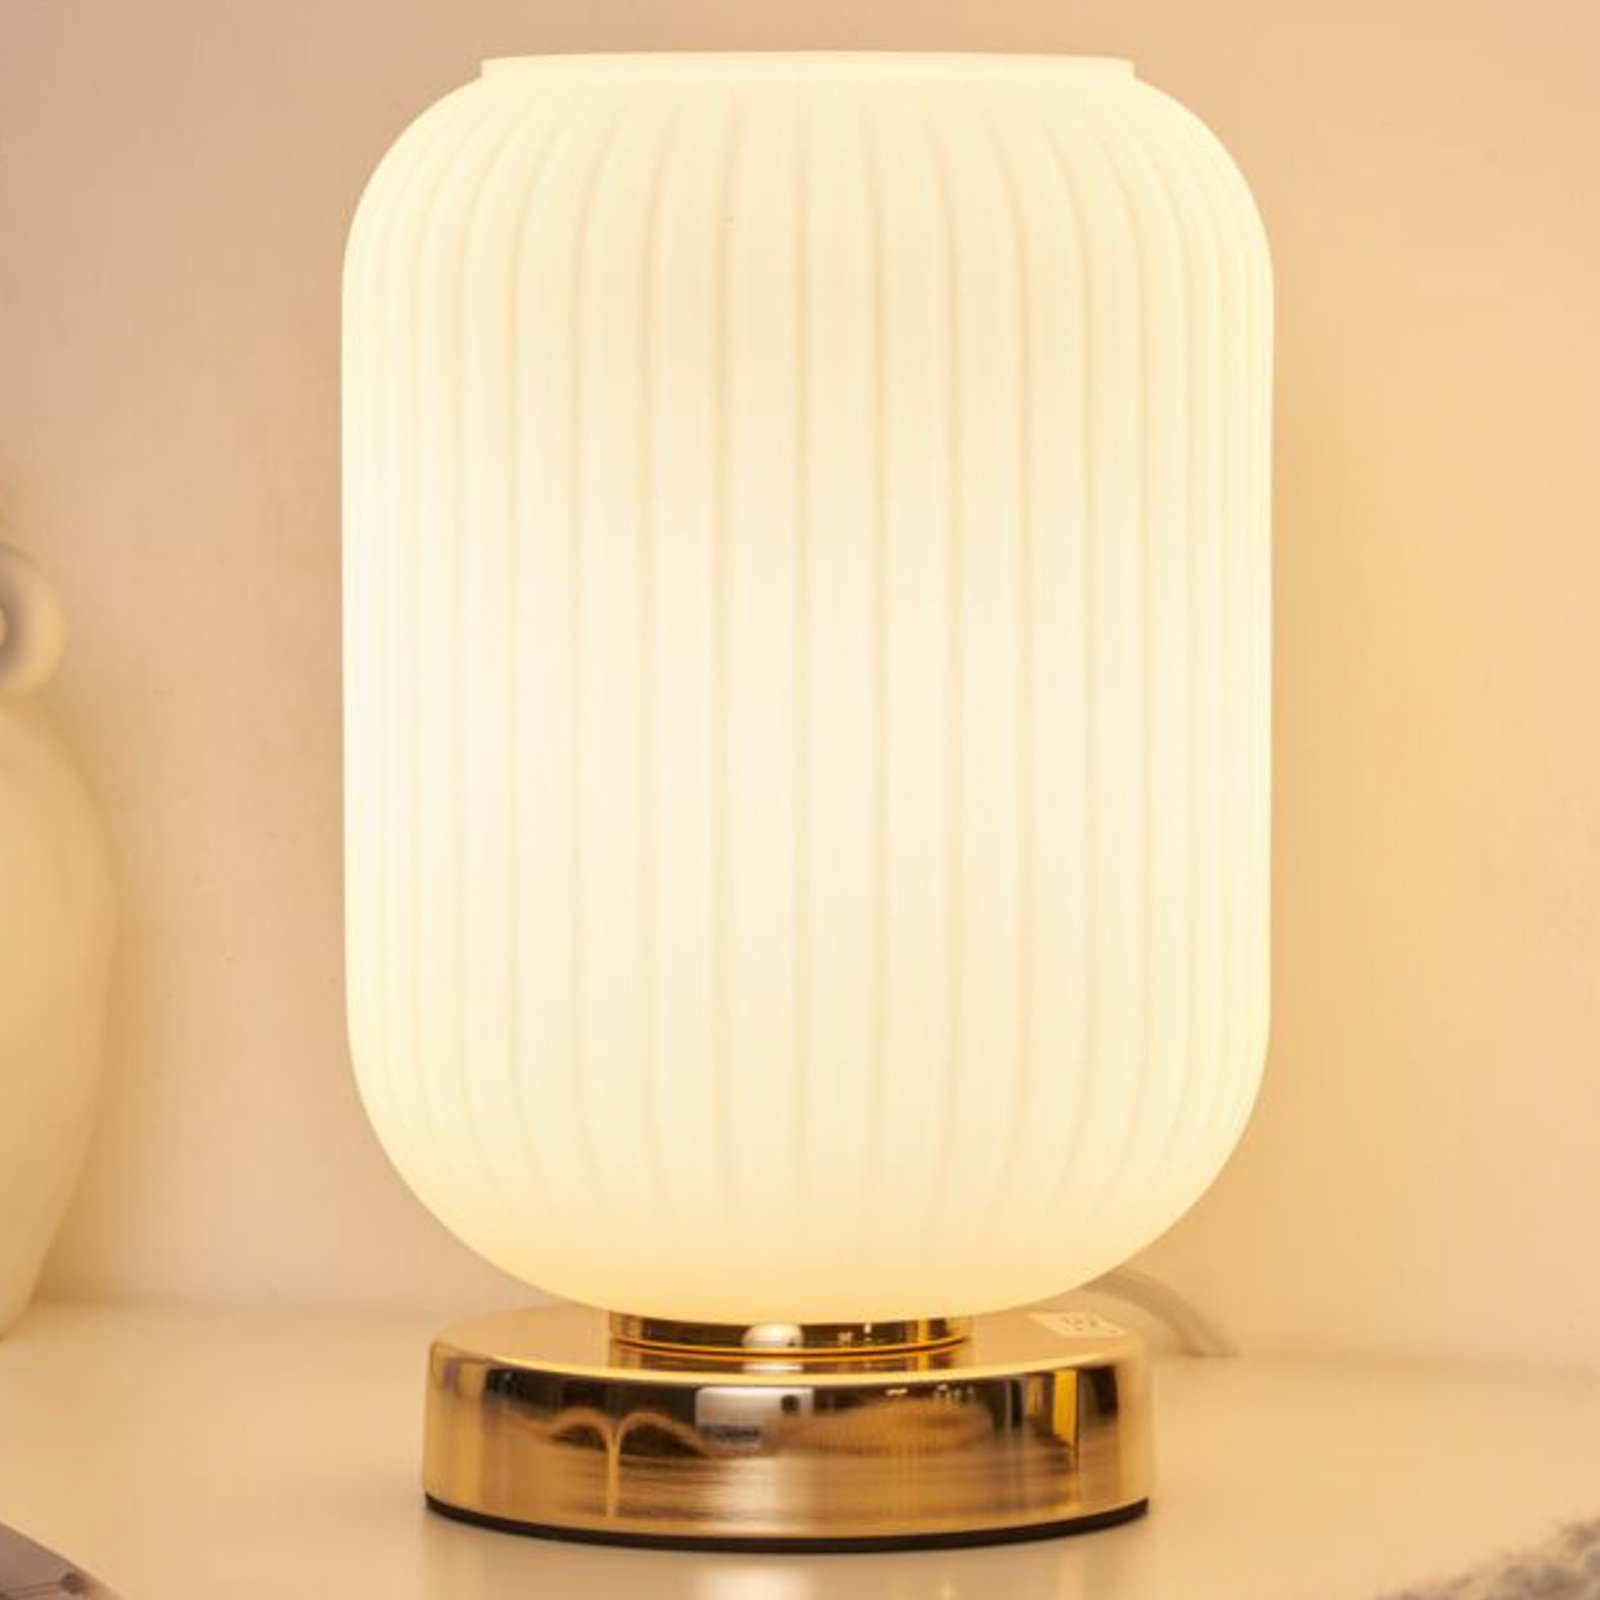 Pauleen Noble Purity bordlampe med hvidt glas